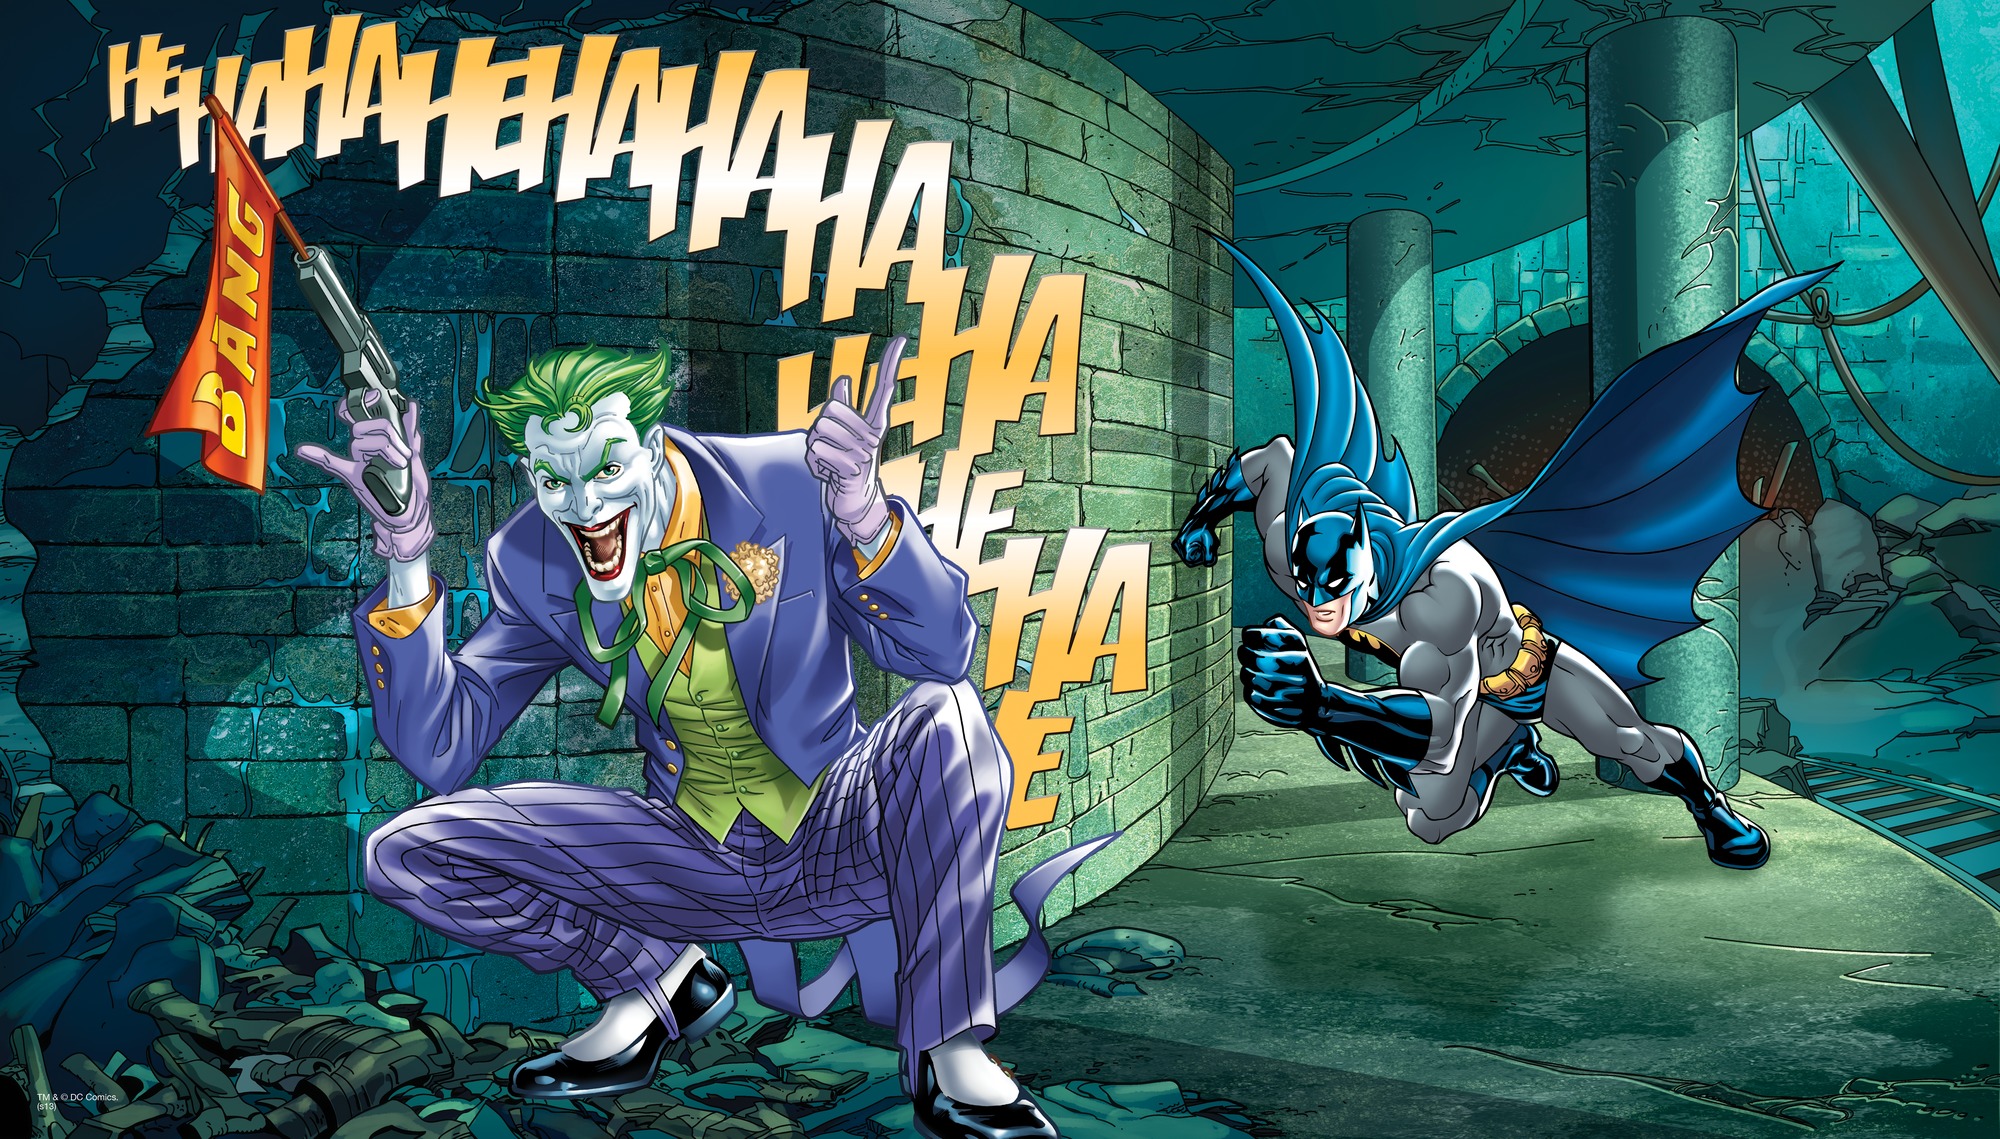 Batman Chases The Joker Wallpaper Mural Wallsauce